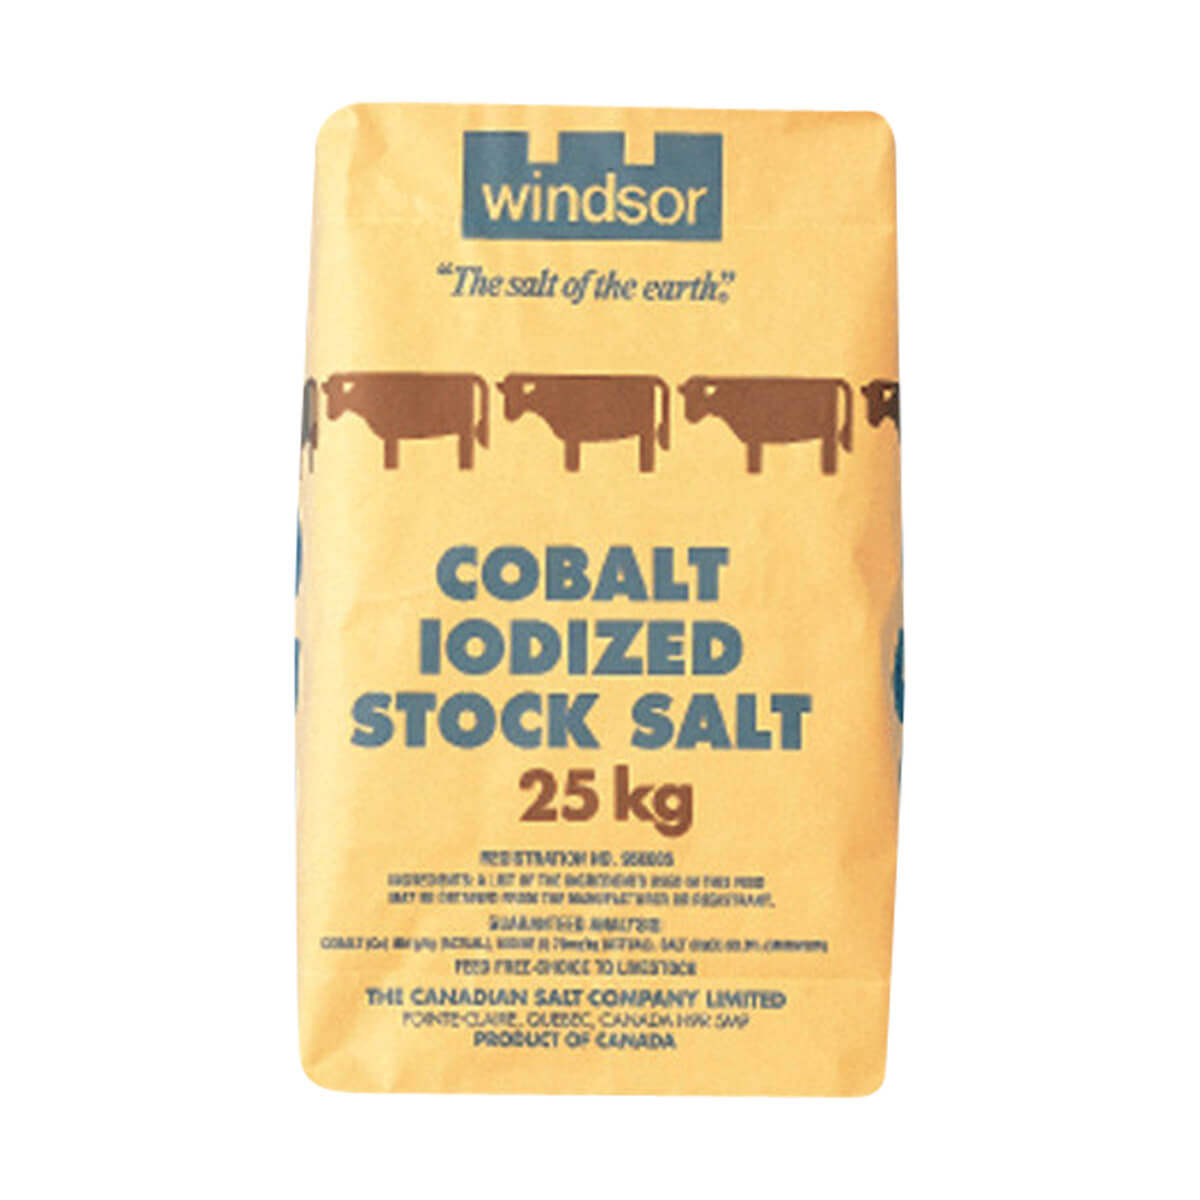 Windsor Cobalt Iodized Stock Salt - 25 kg